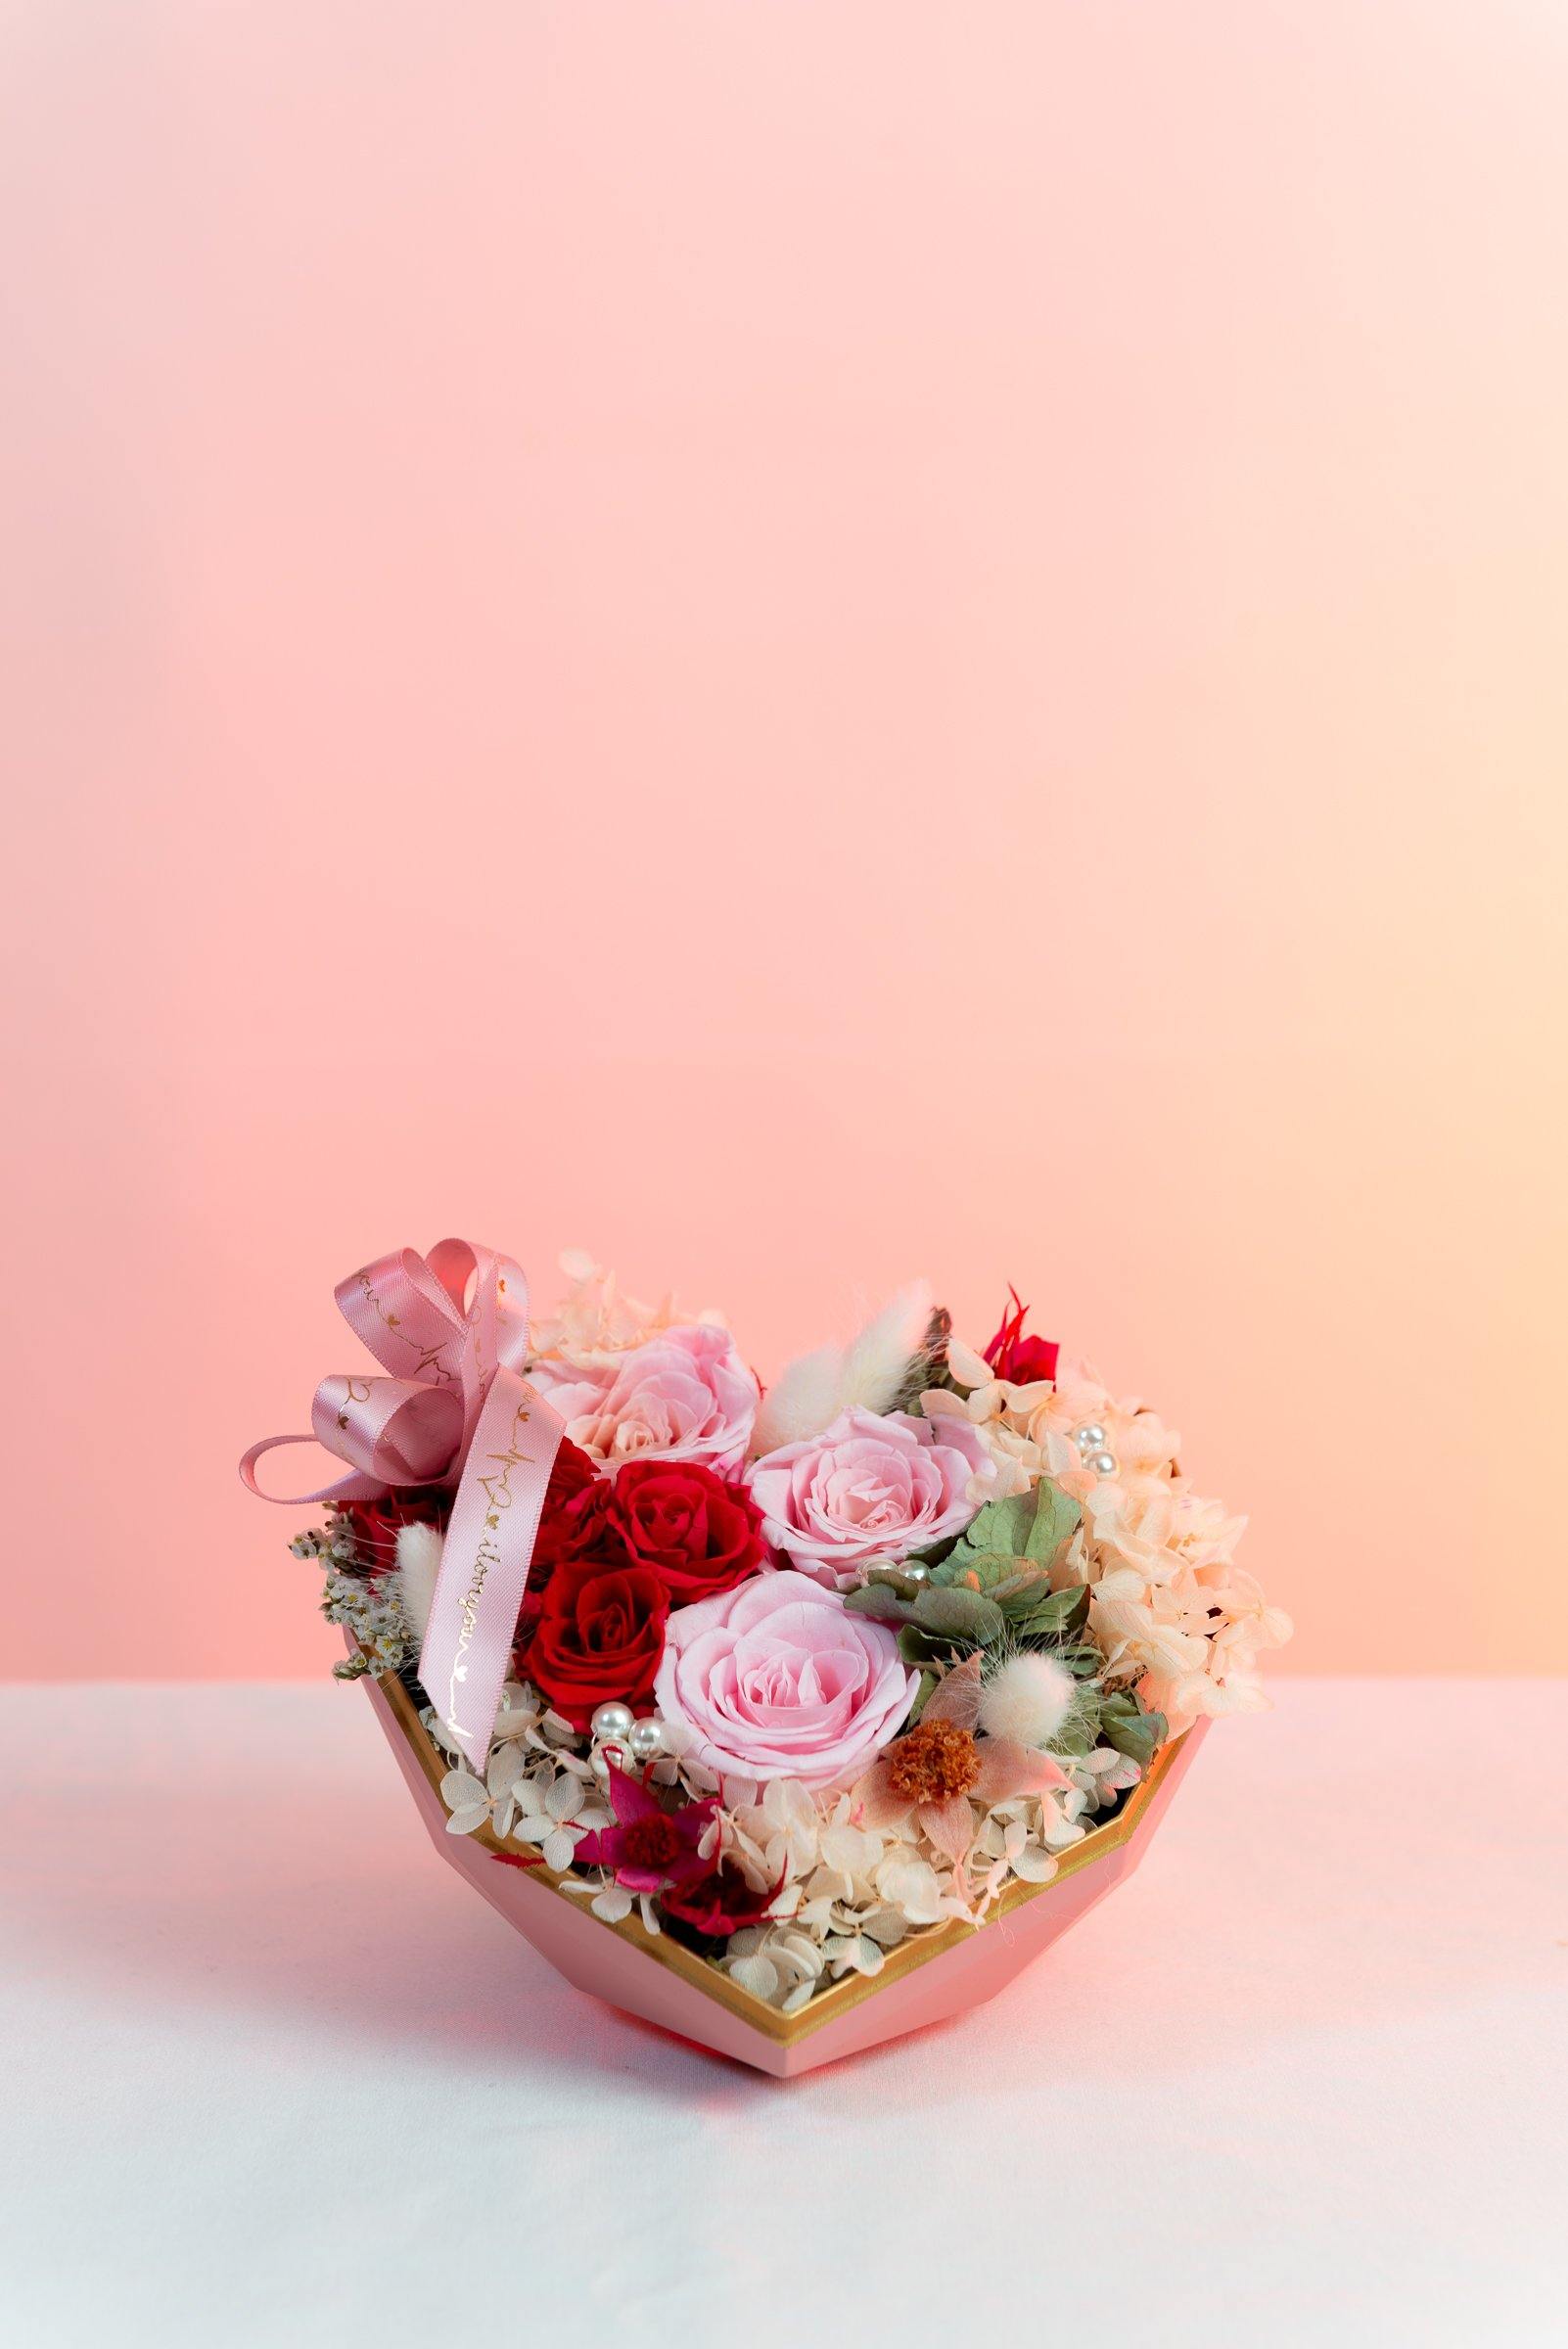 Whimsical Love - Four Seasons Floristry